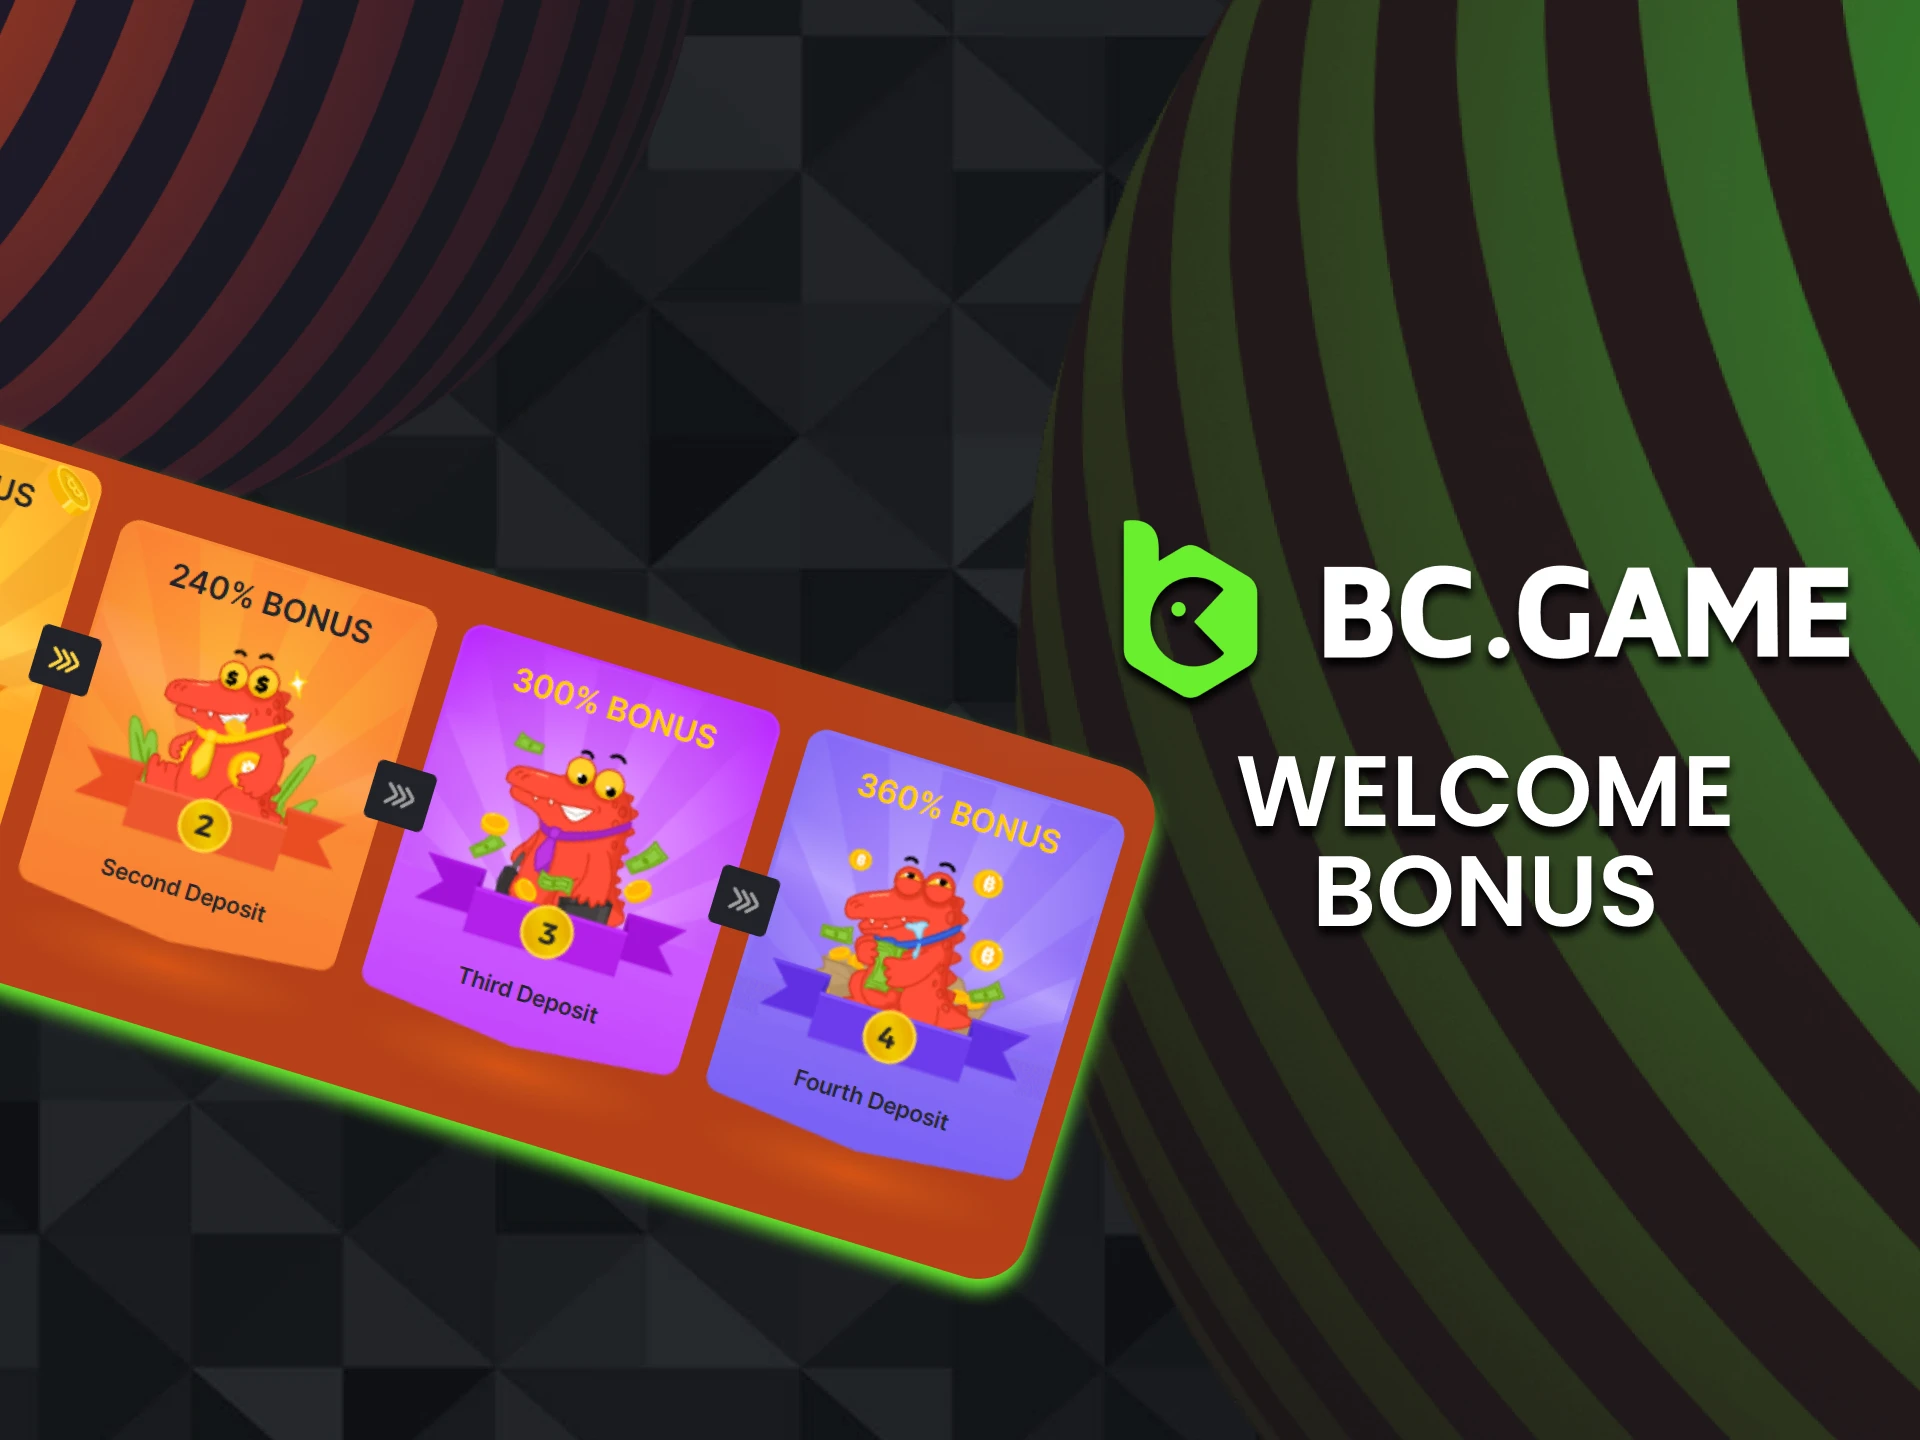 BC Game gives bonuses for betting on football.